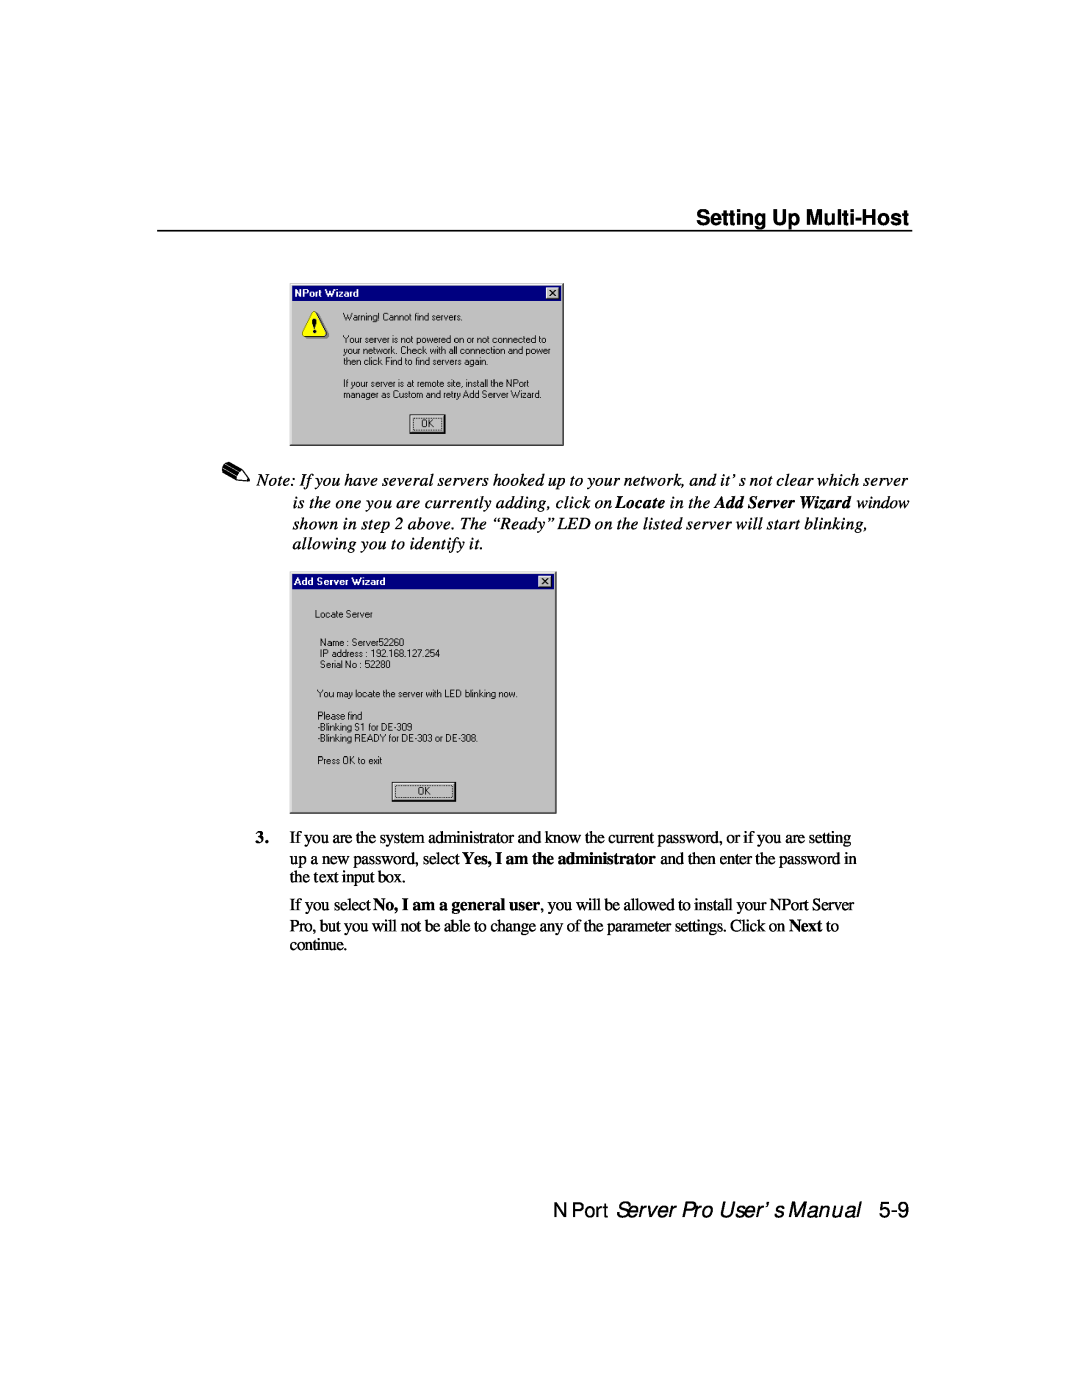 Moxa Technologies DE-308, DE-303 manual Setting Up Multi-Host, NPort Server Pro User’s Manual 